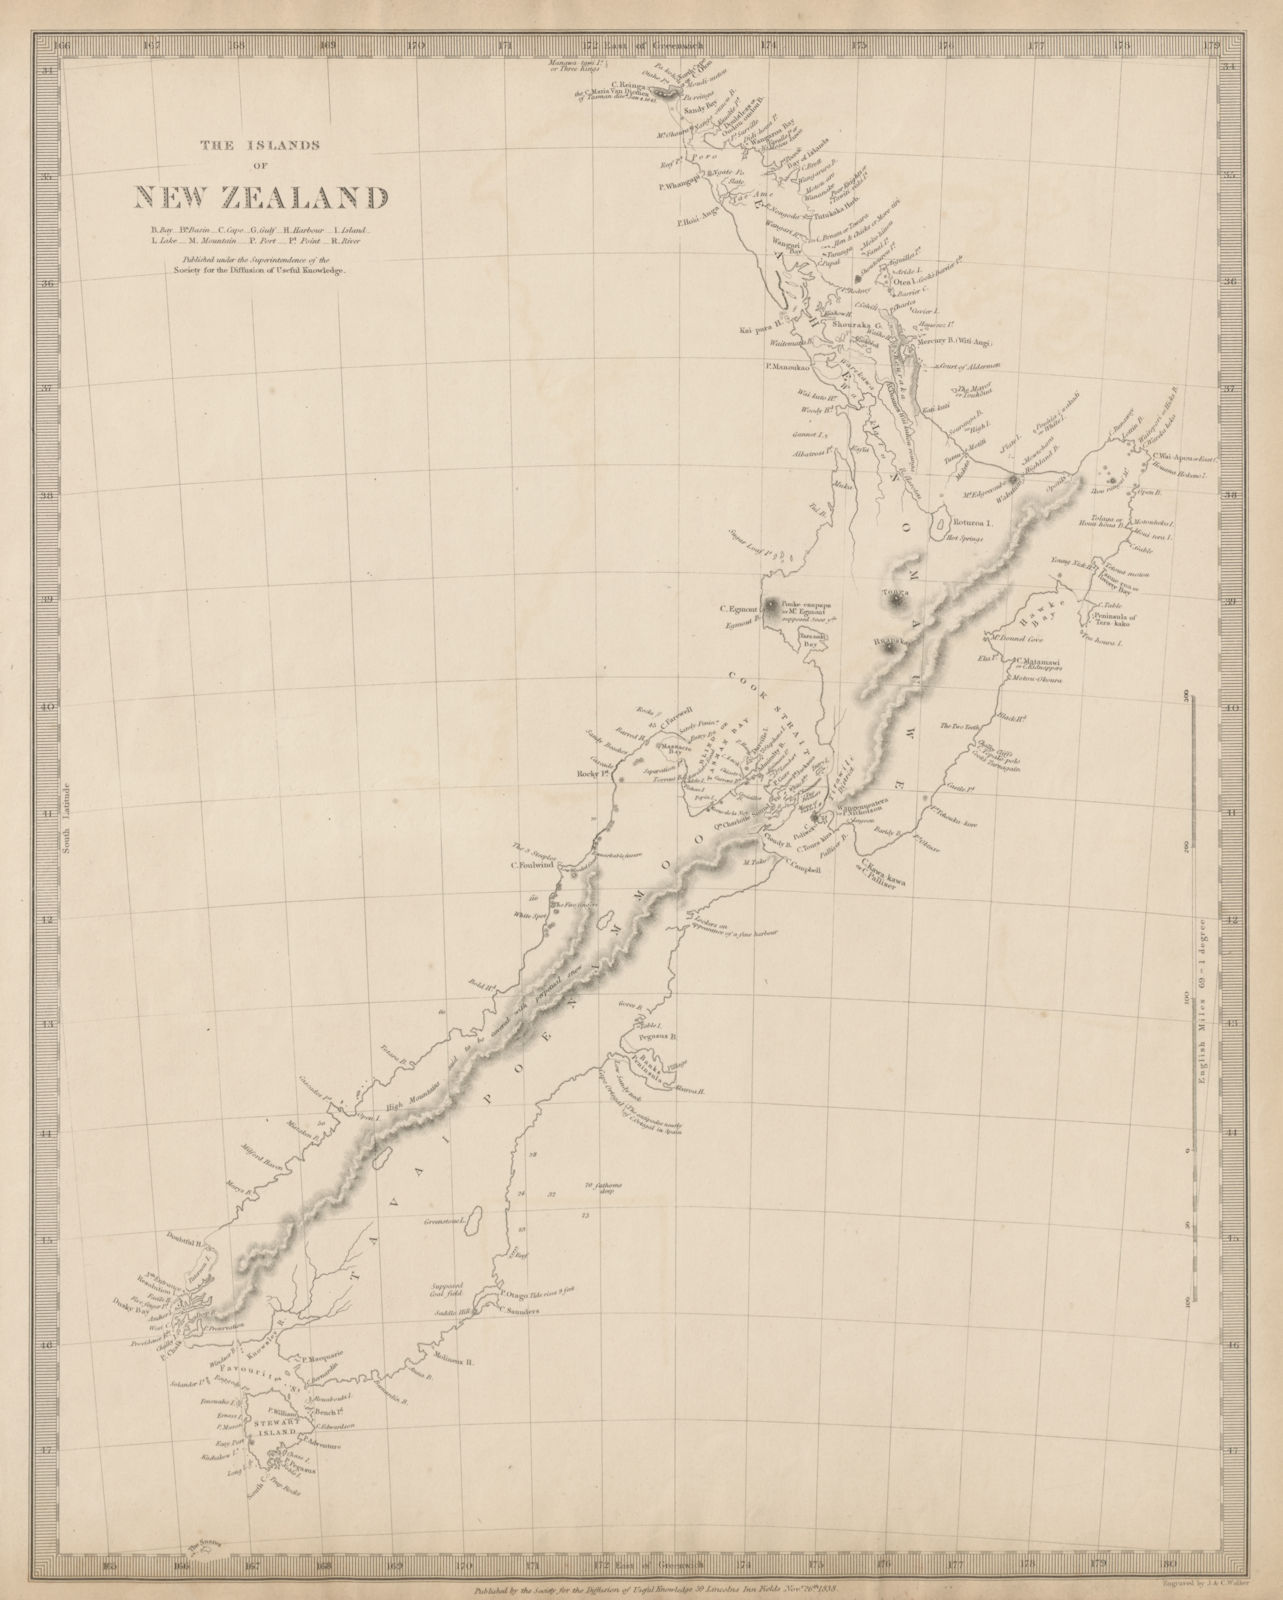 Pre-European Maori NEW ZEALAND. Tavai Poenammoo Eaheinomauwe. SDUK 1844 map